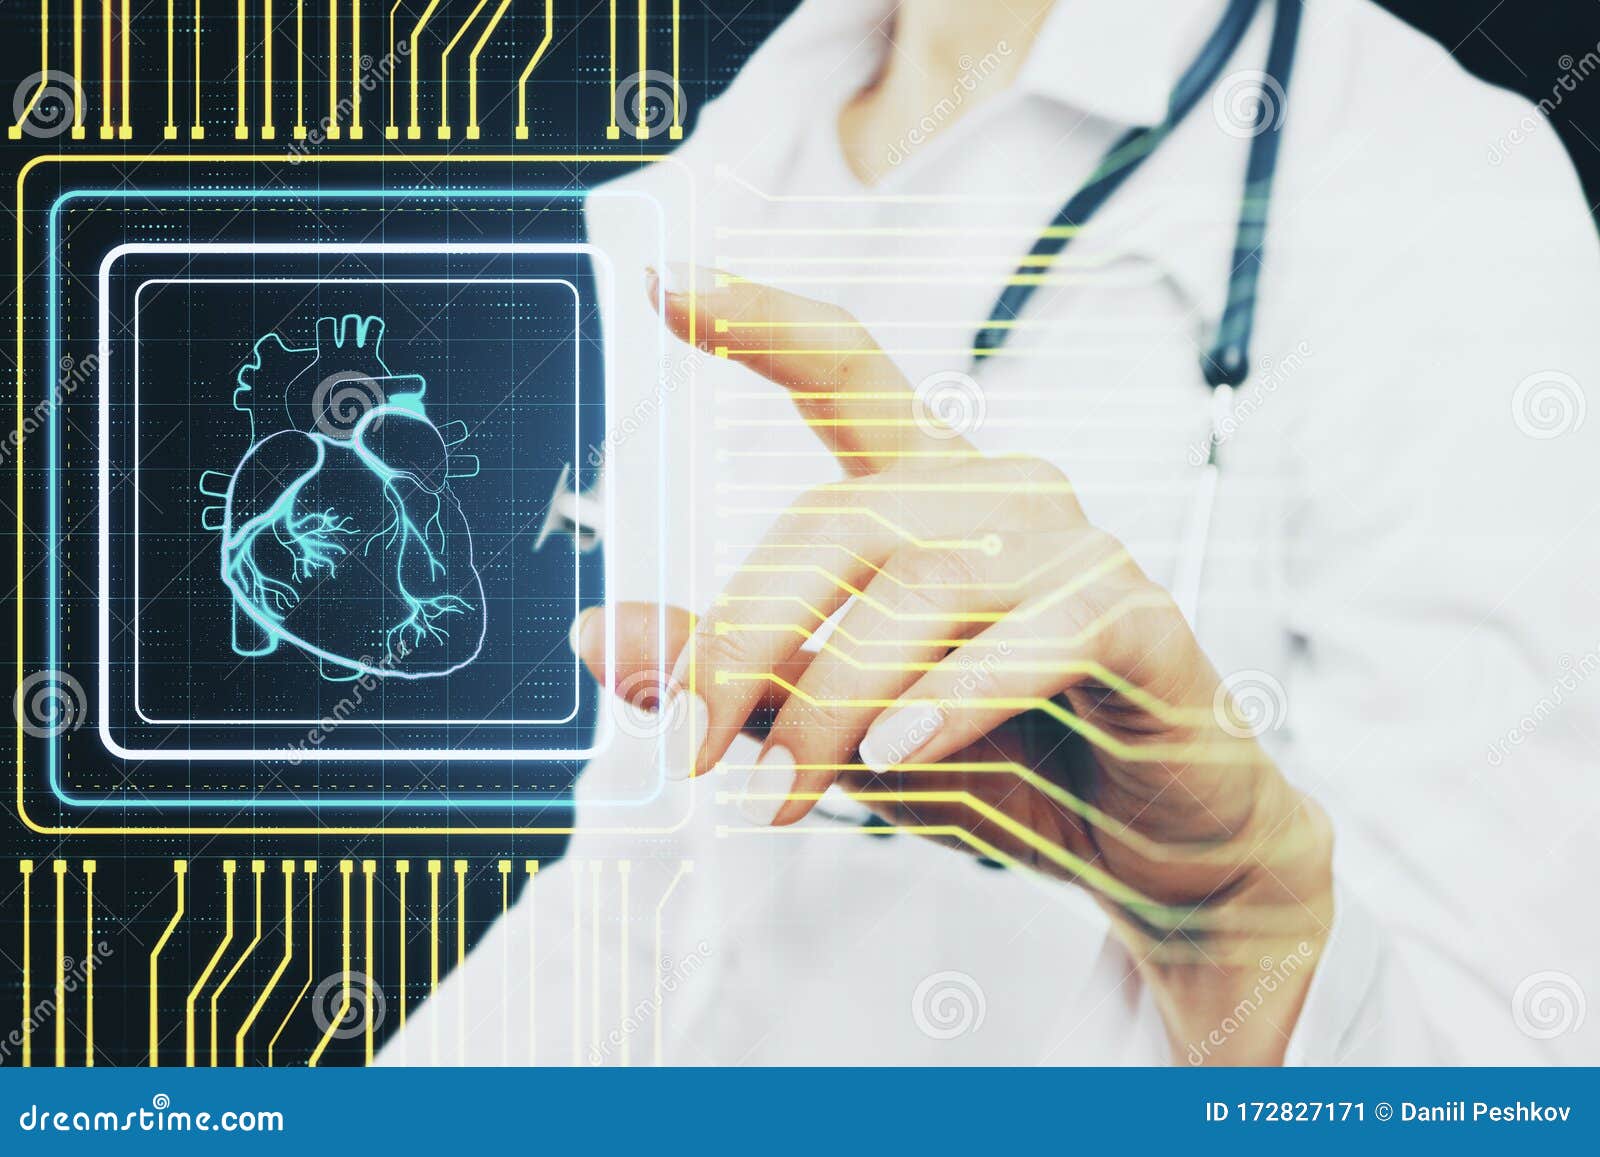 Digital heart. Голограмма в медицине. Цифровое сердце.